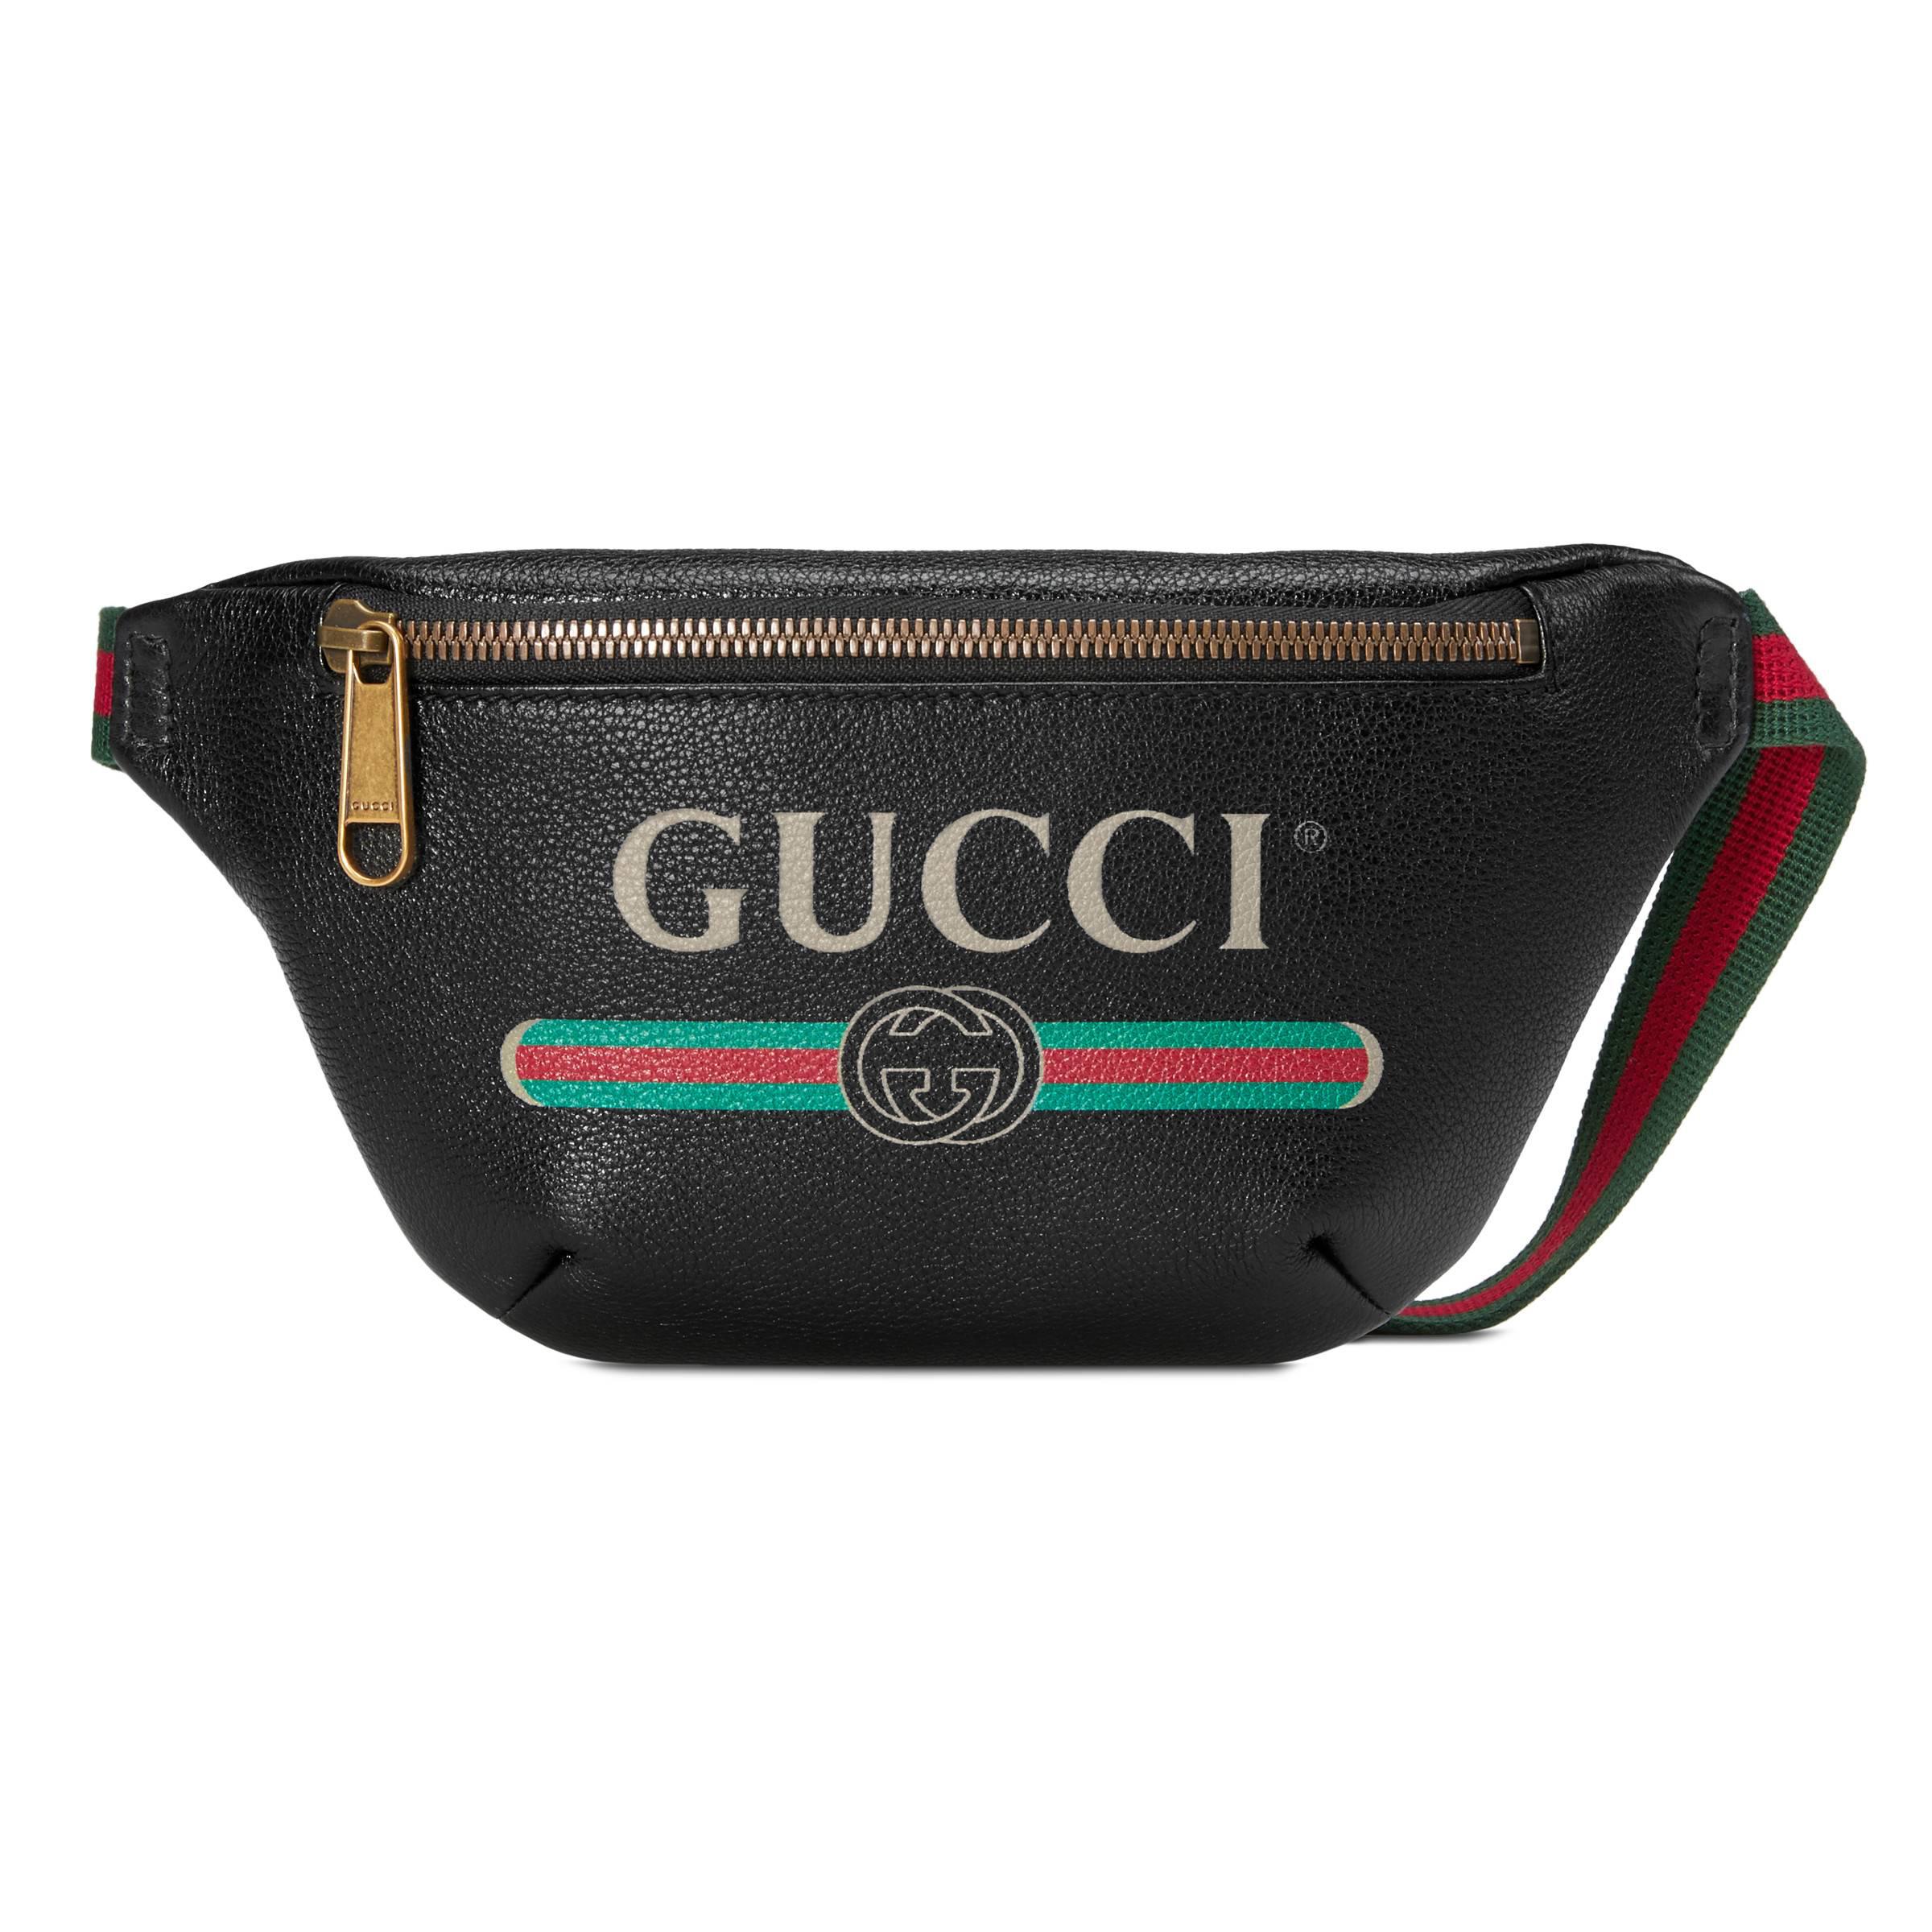 gucci belt bag small size